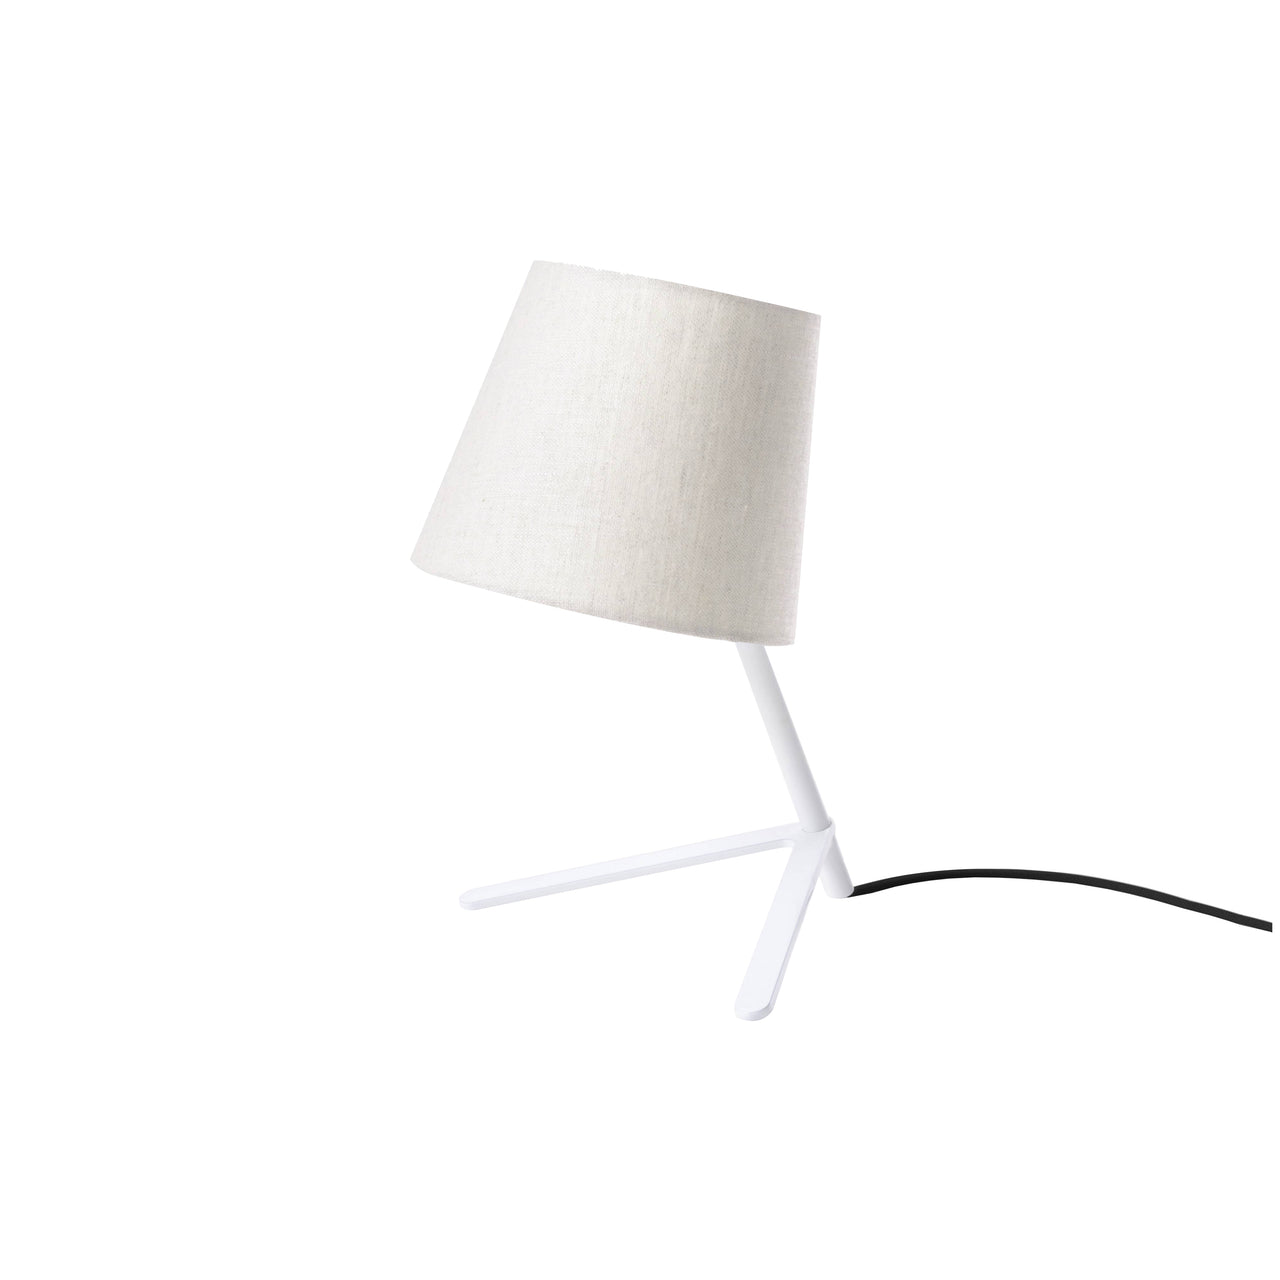 Tokyo 1 Table Lamp: White